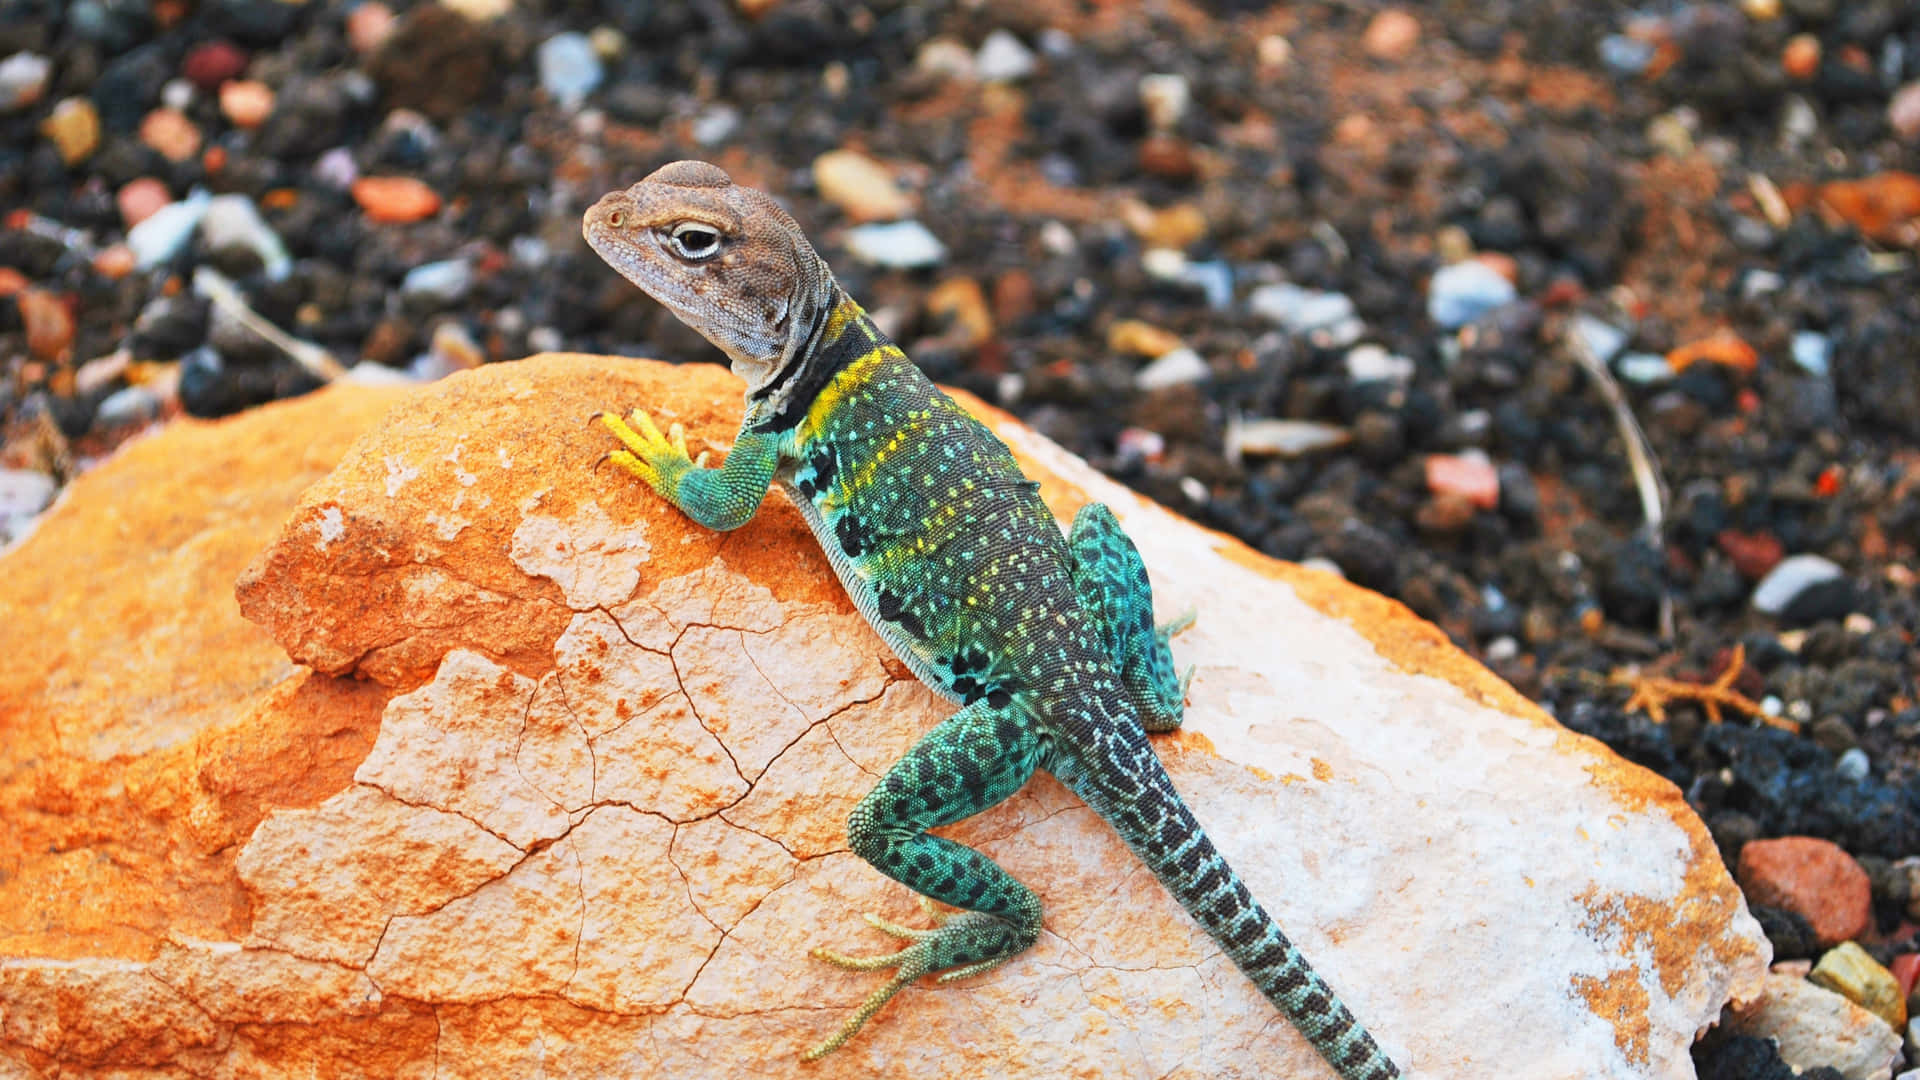 Lizard On Orange Rock Picture